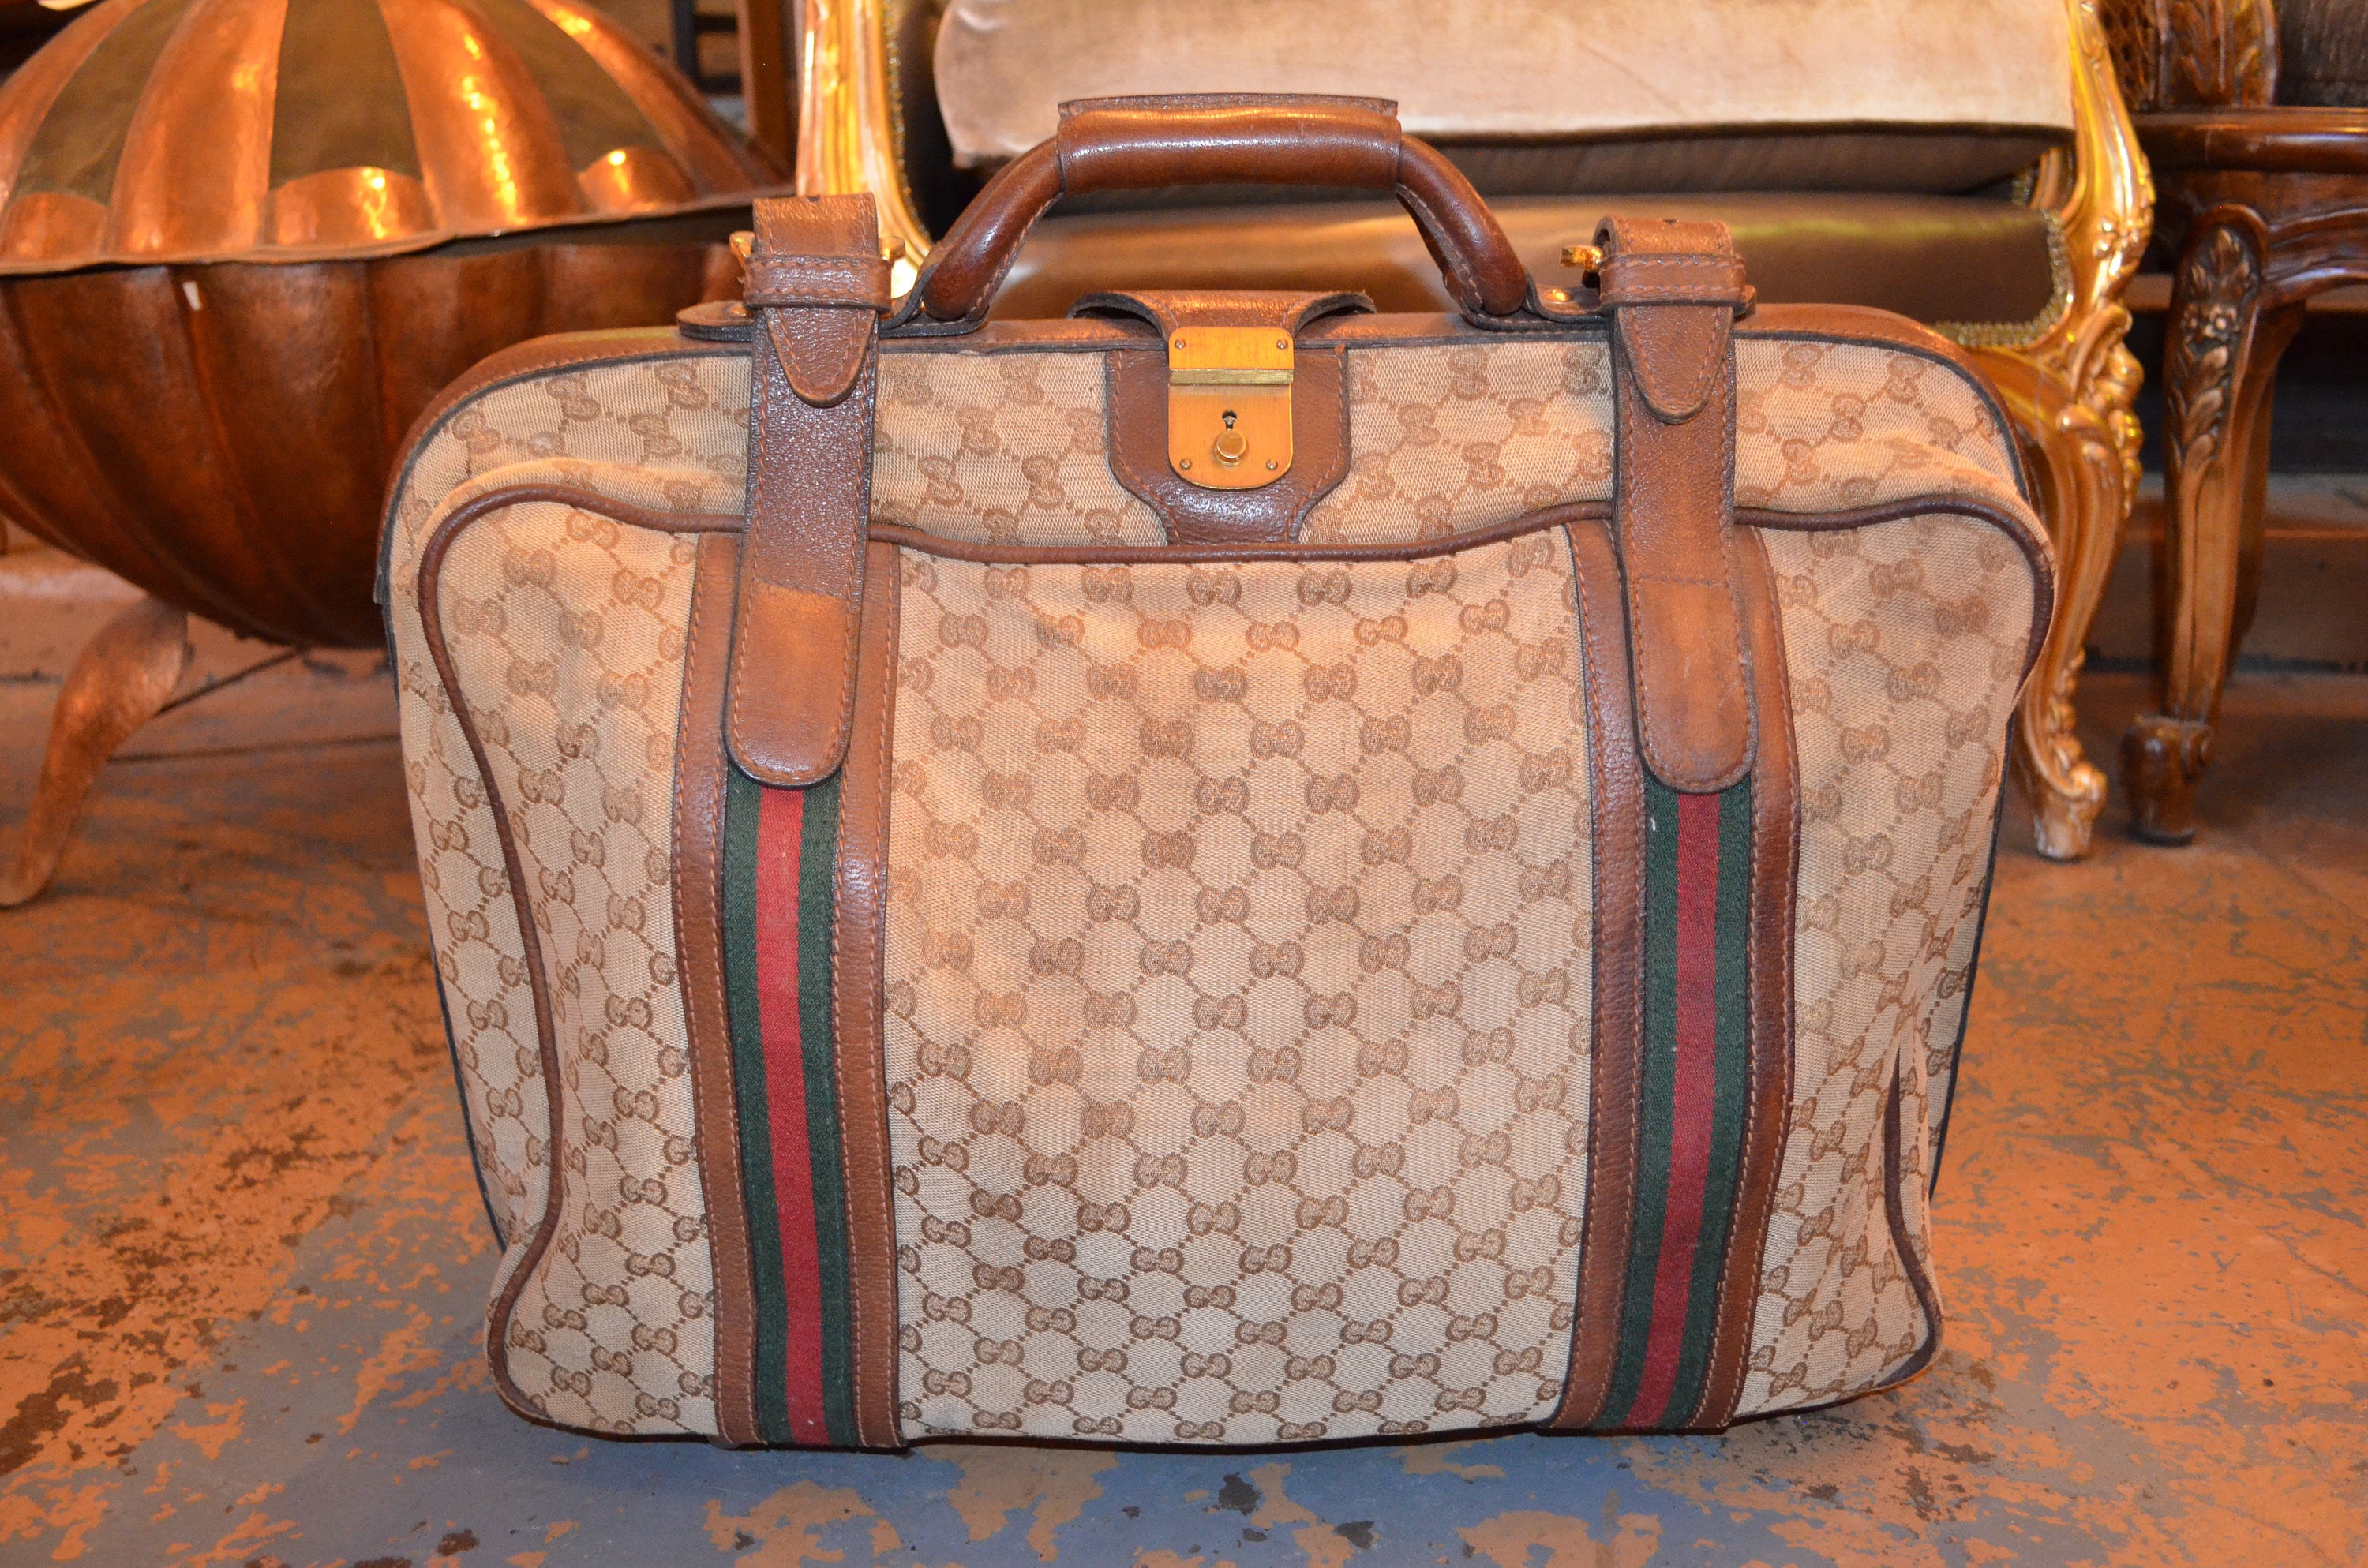 Gucci Luggage Sets Vintage Luggage